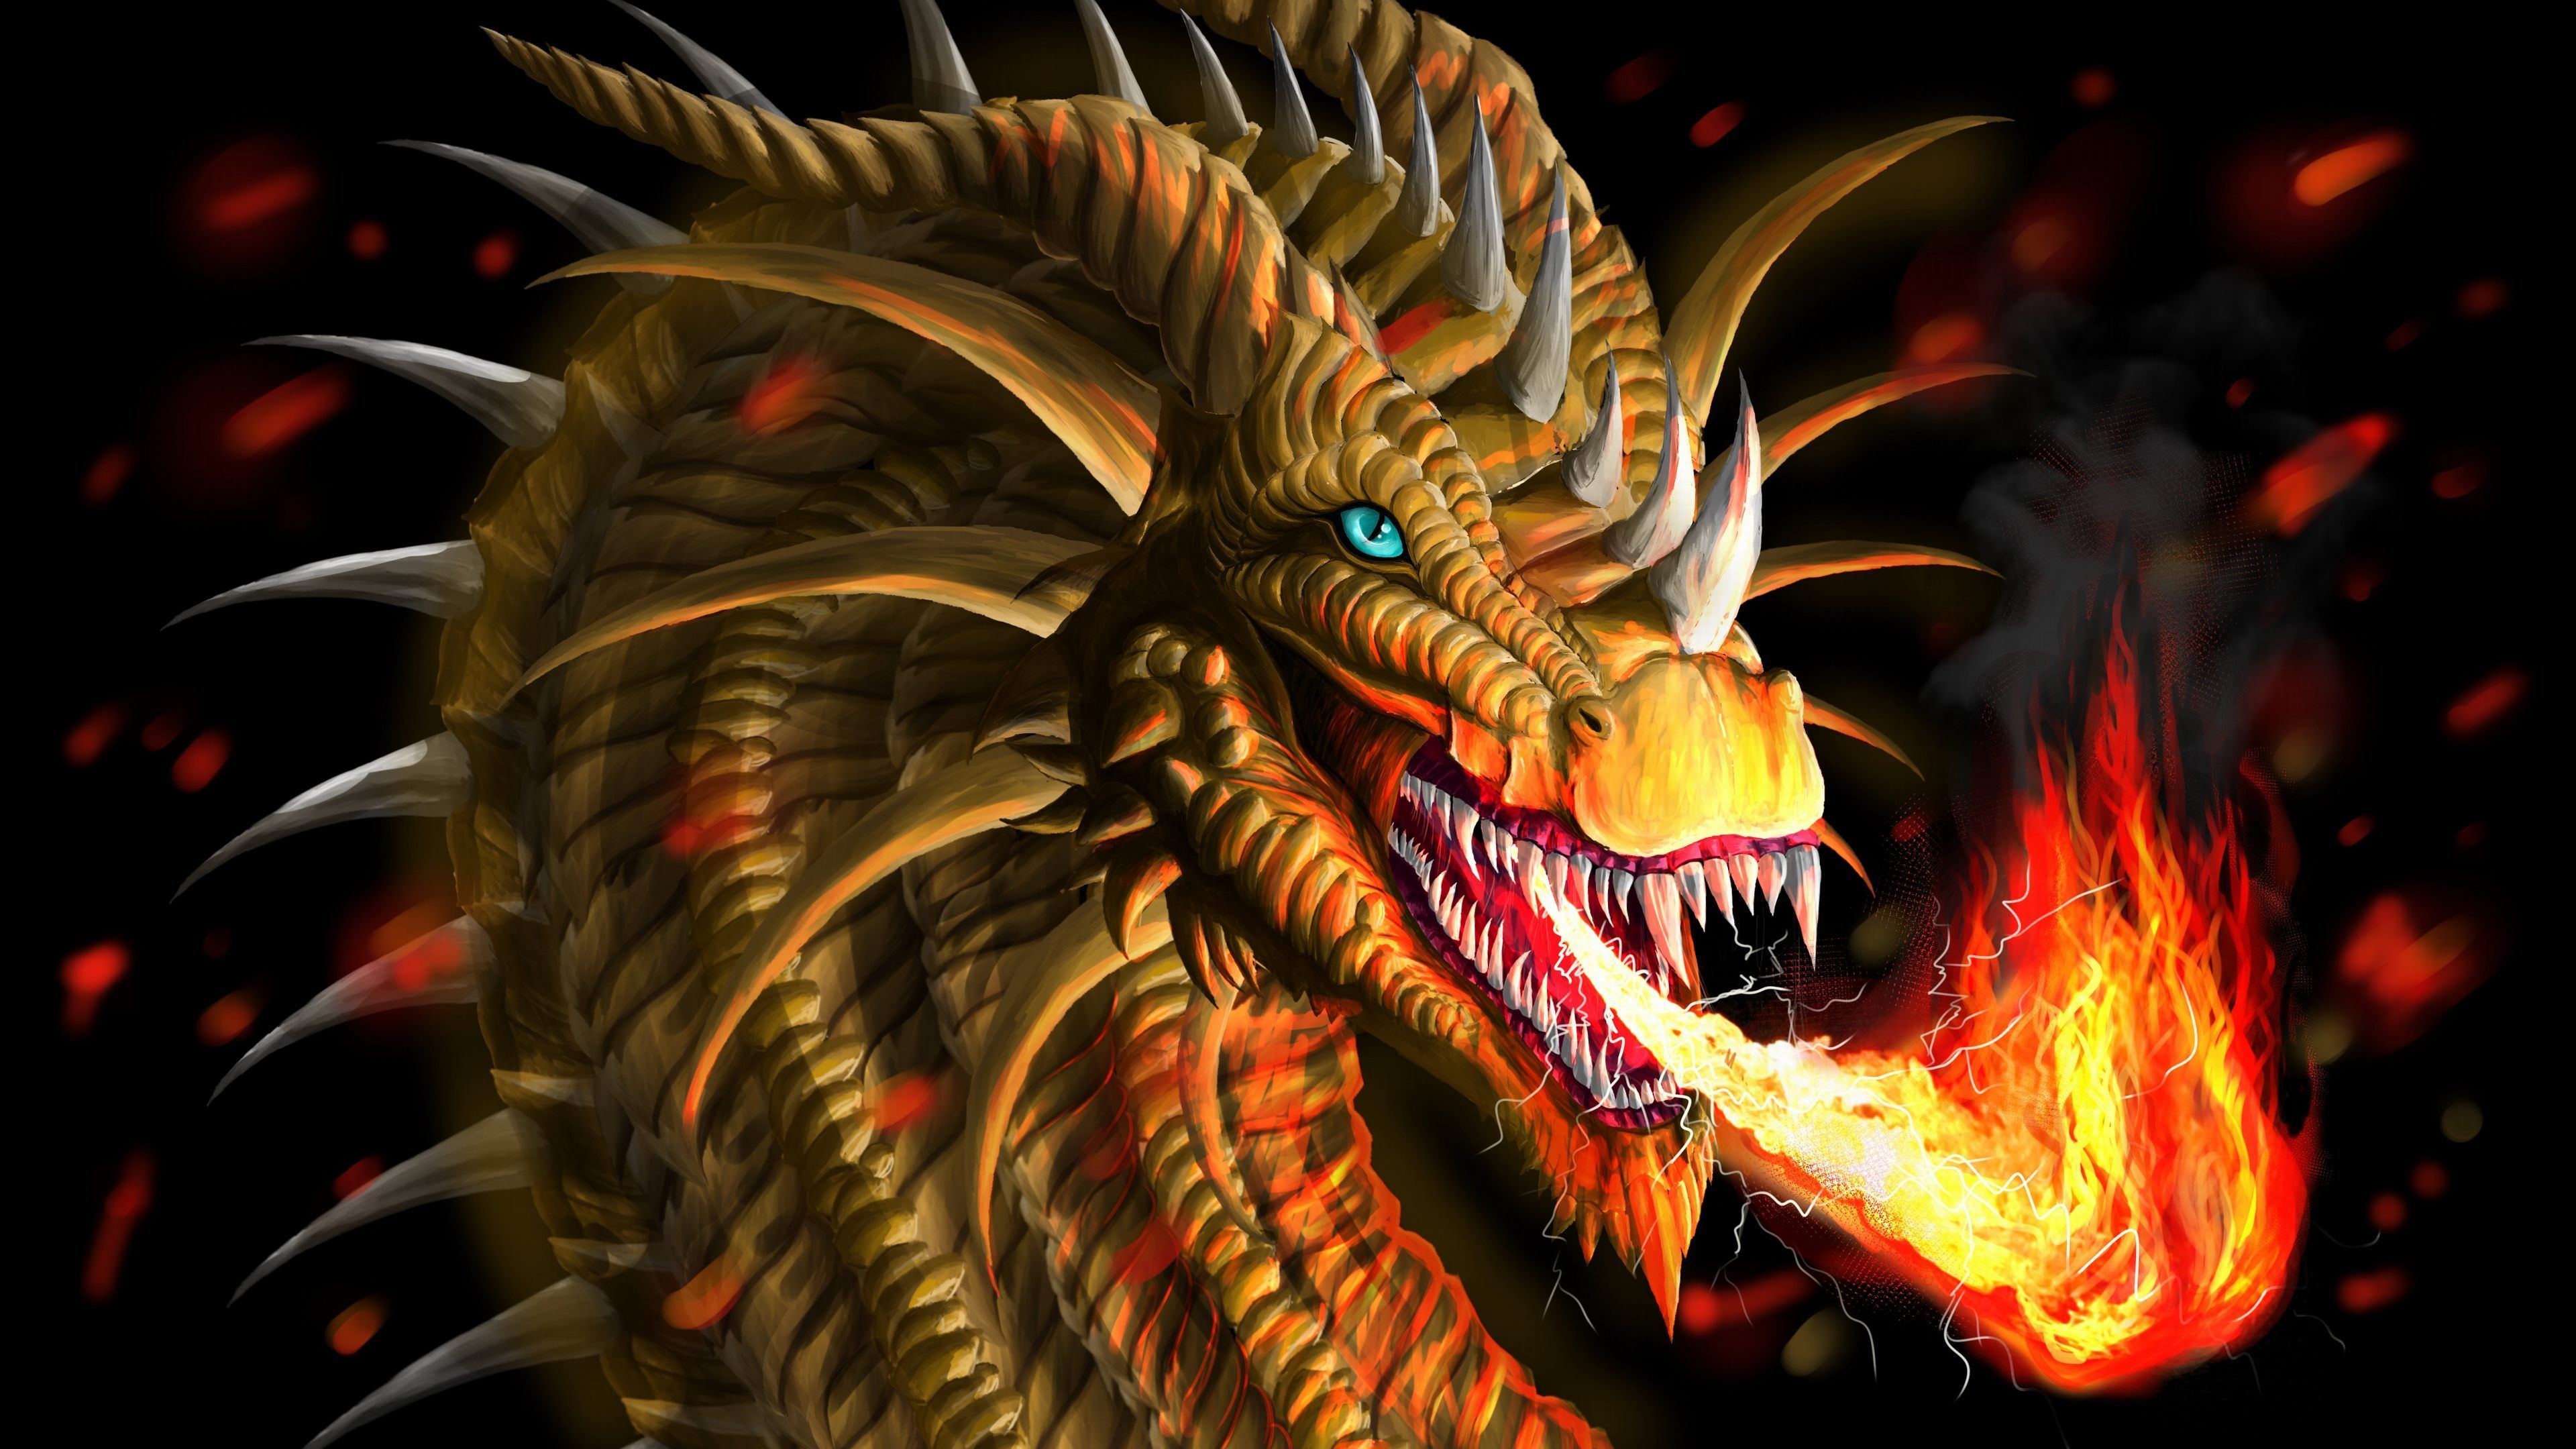 Fire Dragon Wallpaper High Definition • dodskypict. Dragon picture, Fire dragon, Fire breathing dragon